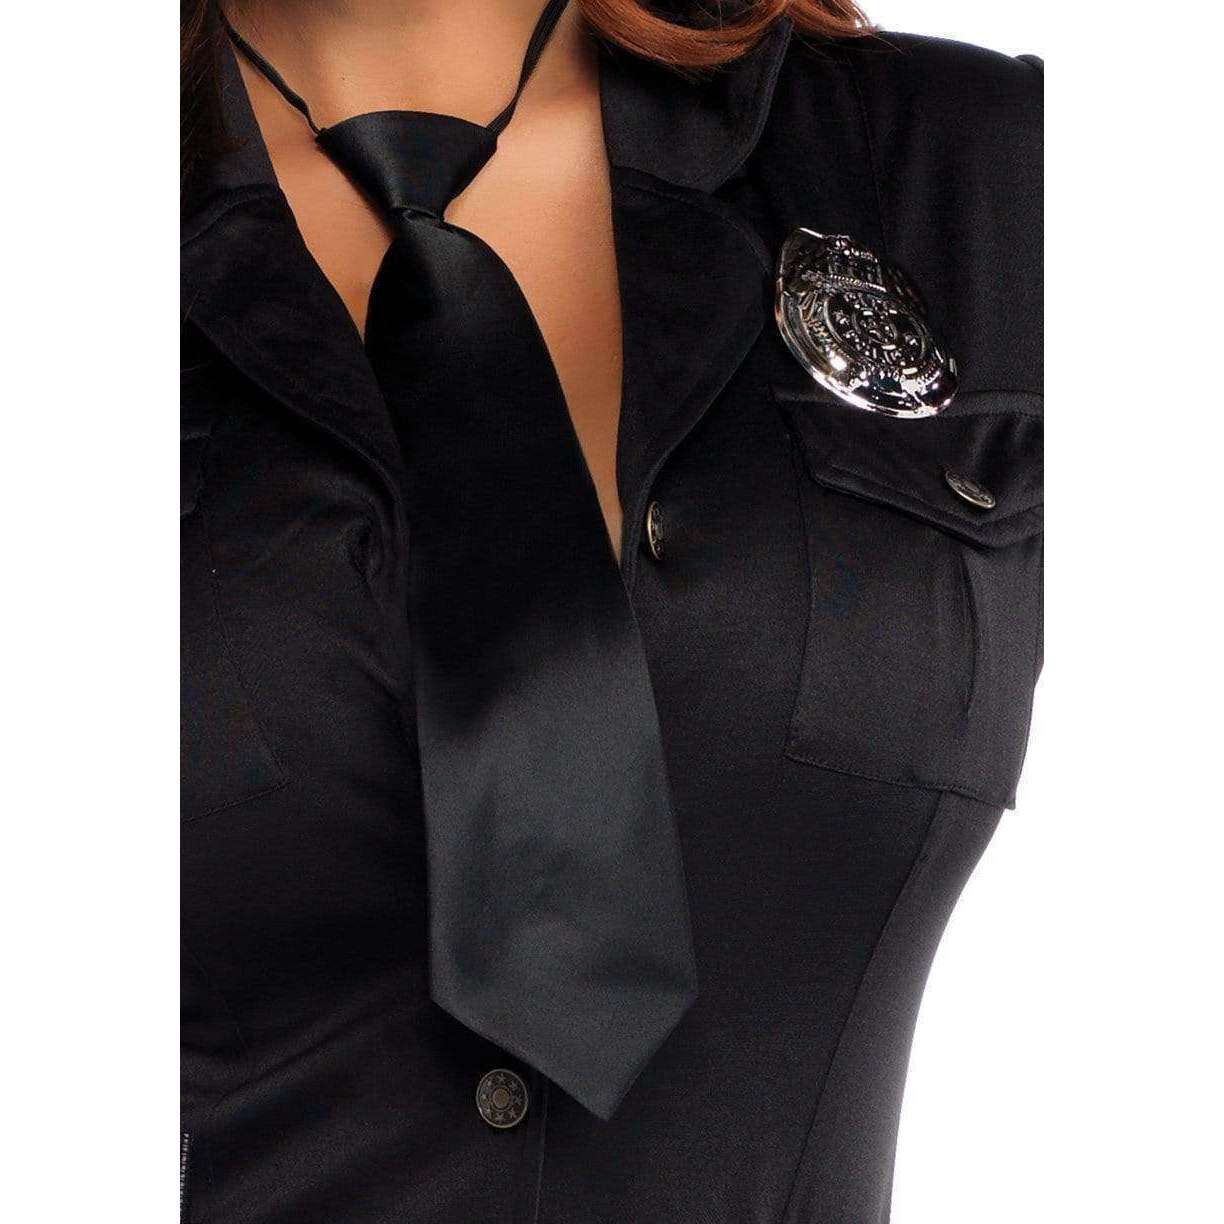 Dirty Cop Women's Sexy Costume